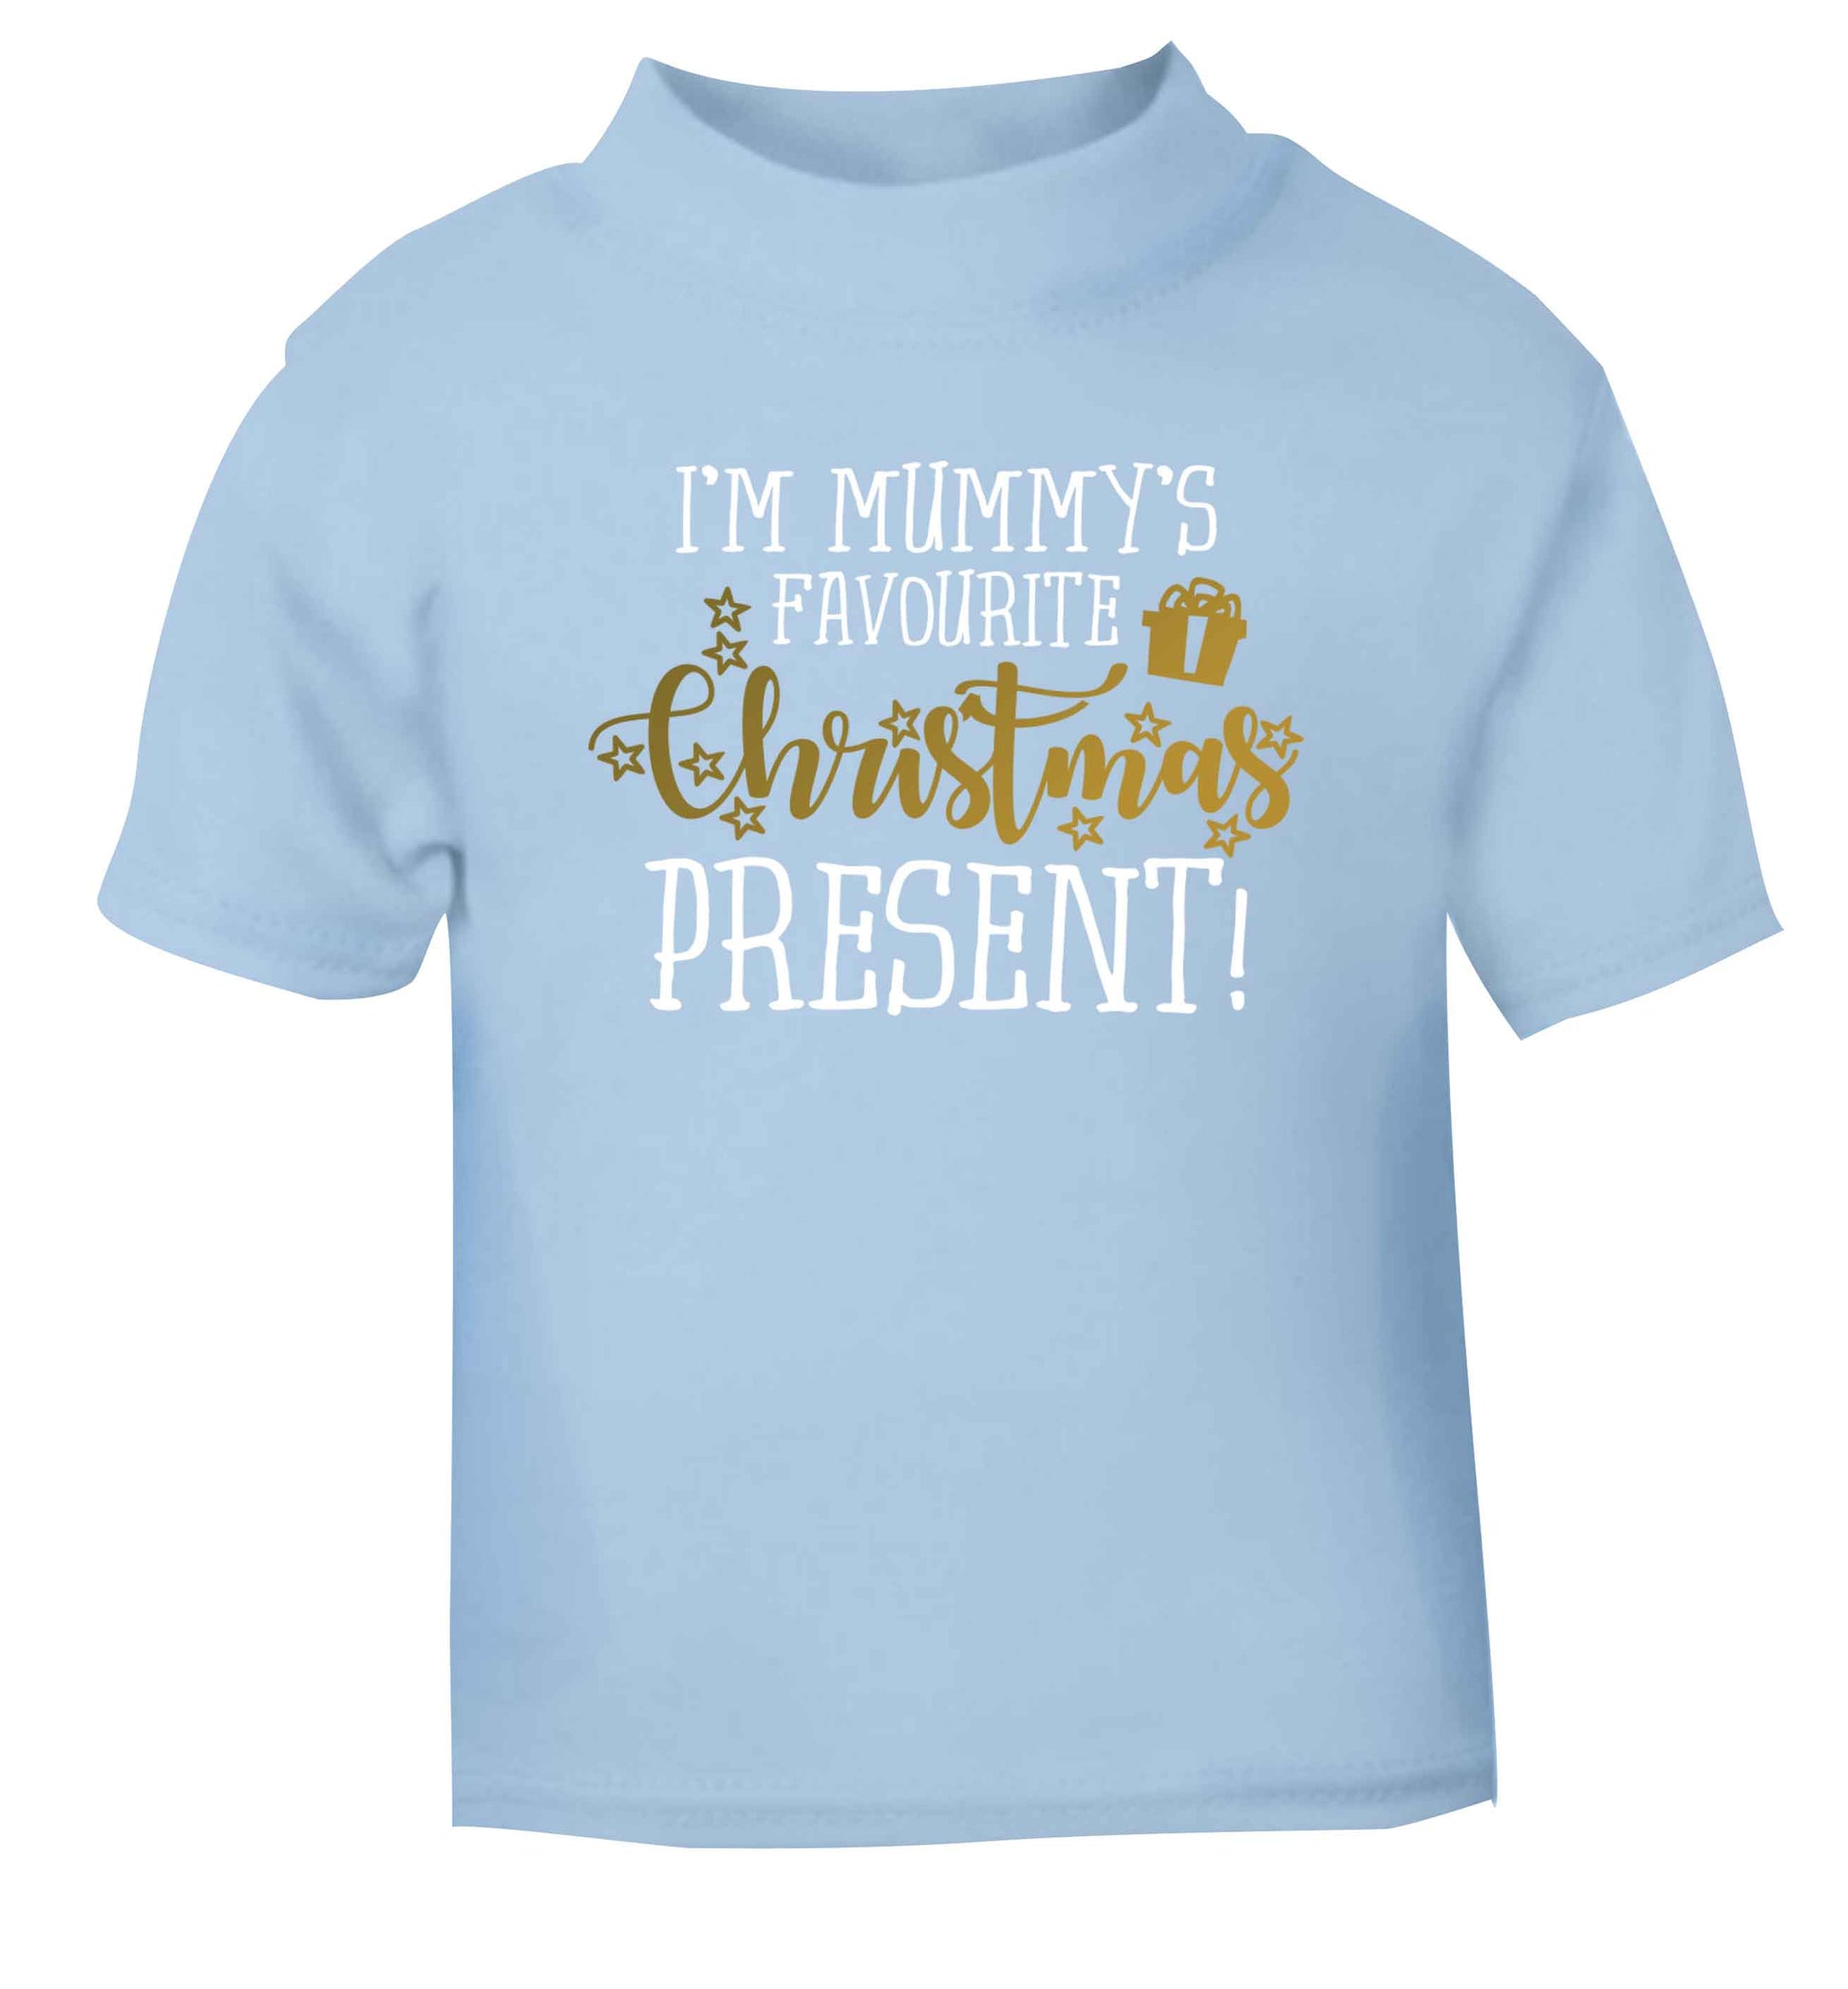 I'm Mummy's favourite Christmas present light blue Baby Toddler Tshirt 2 Years